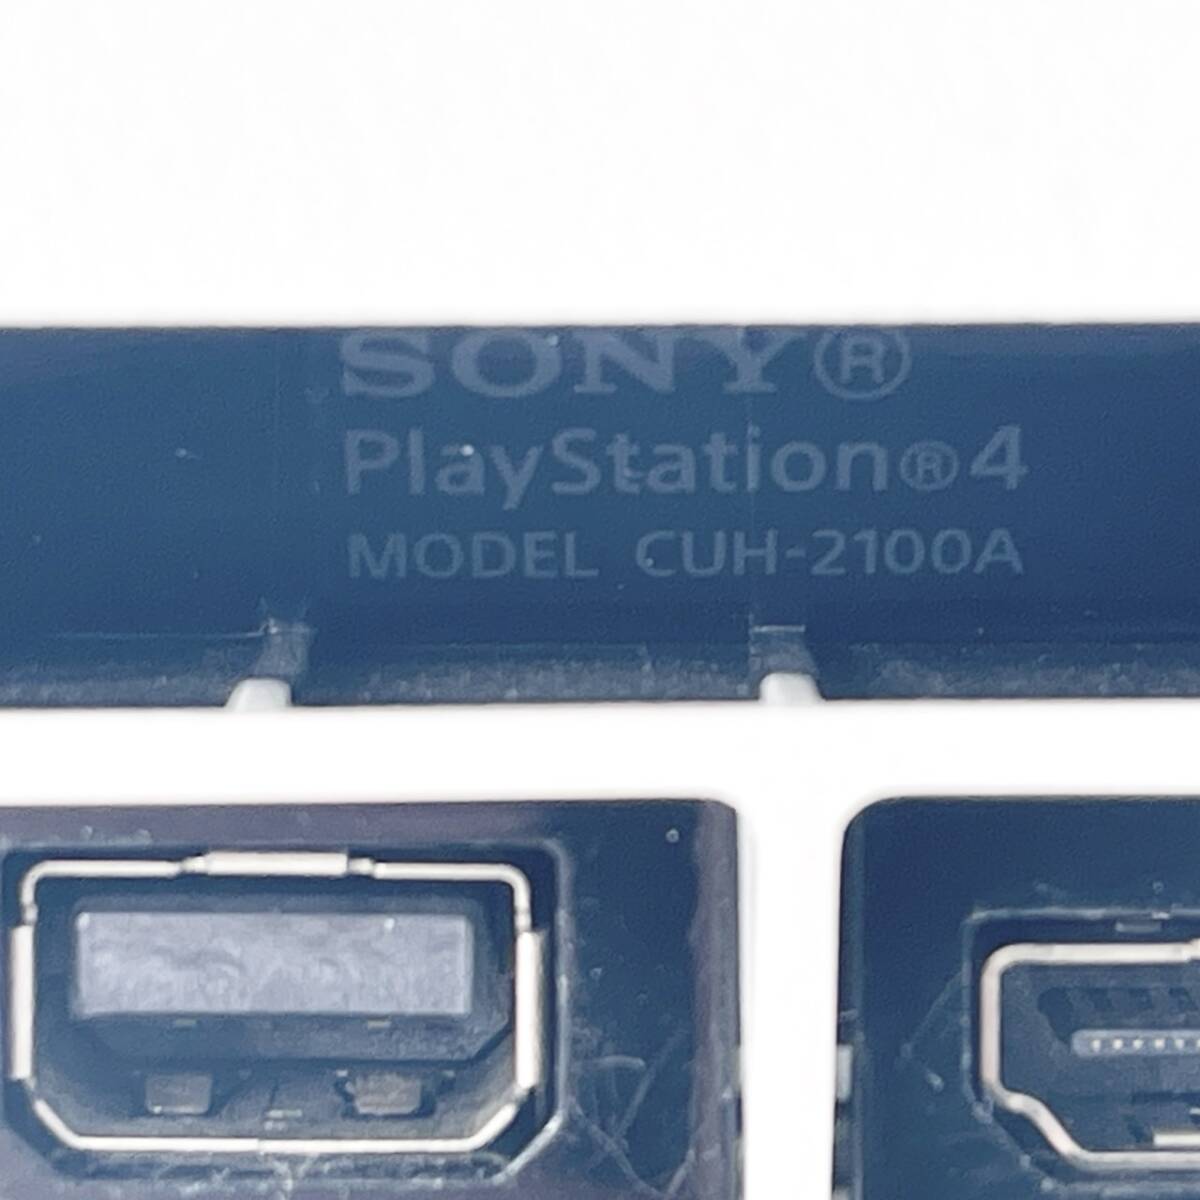 [ FW:11.02 ]1 jpy start used game machine Playstation4 500GB CUH-2100AB02 gray car -* white PlayStation PS4 PlayStation 